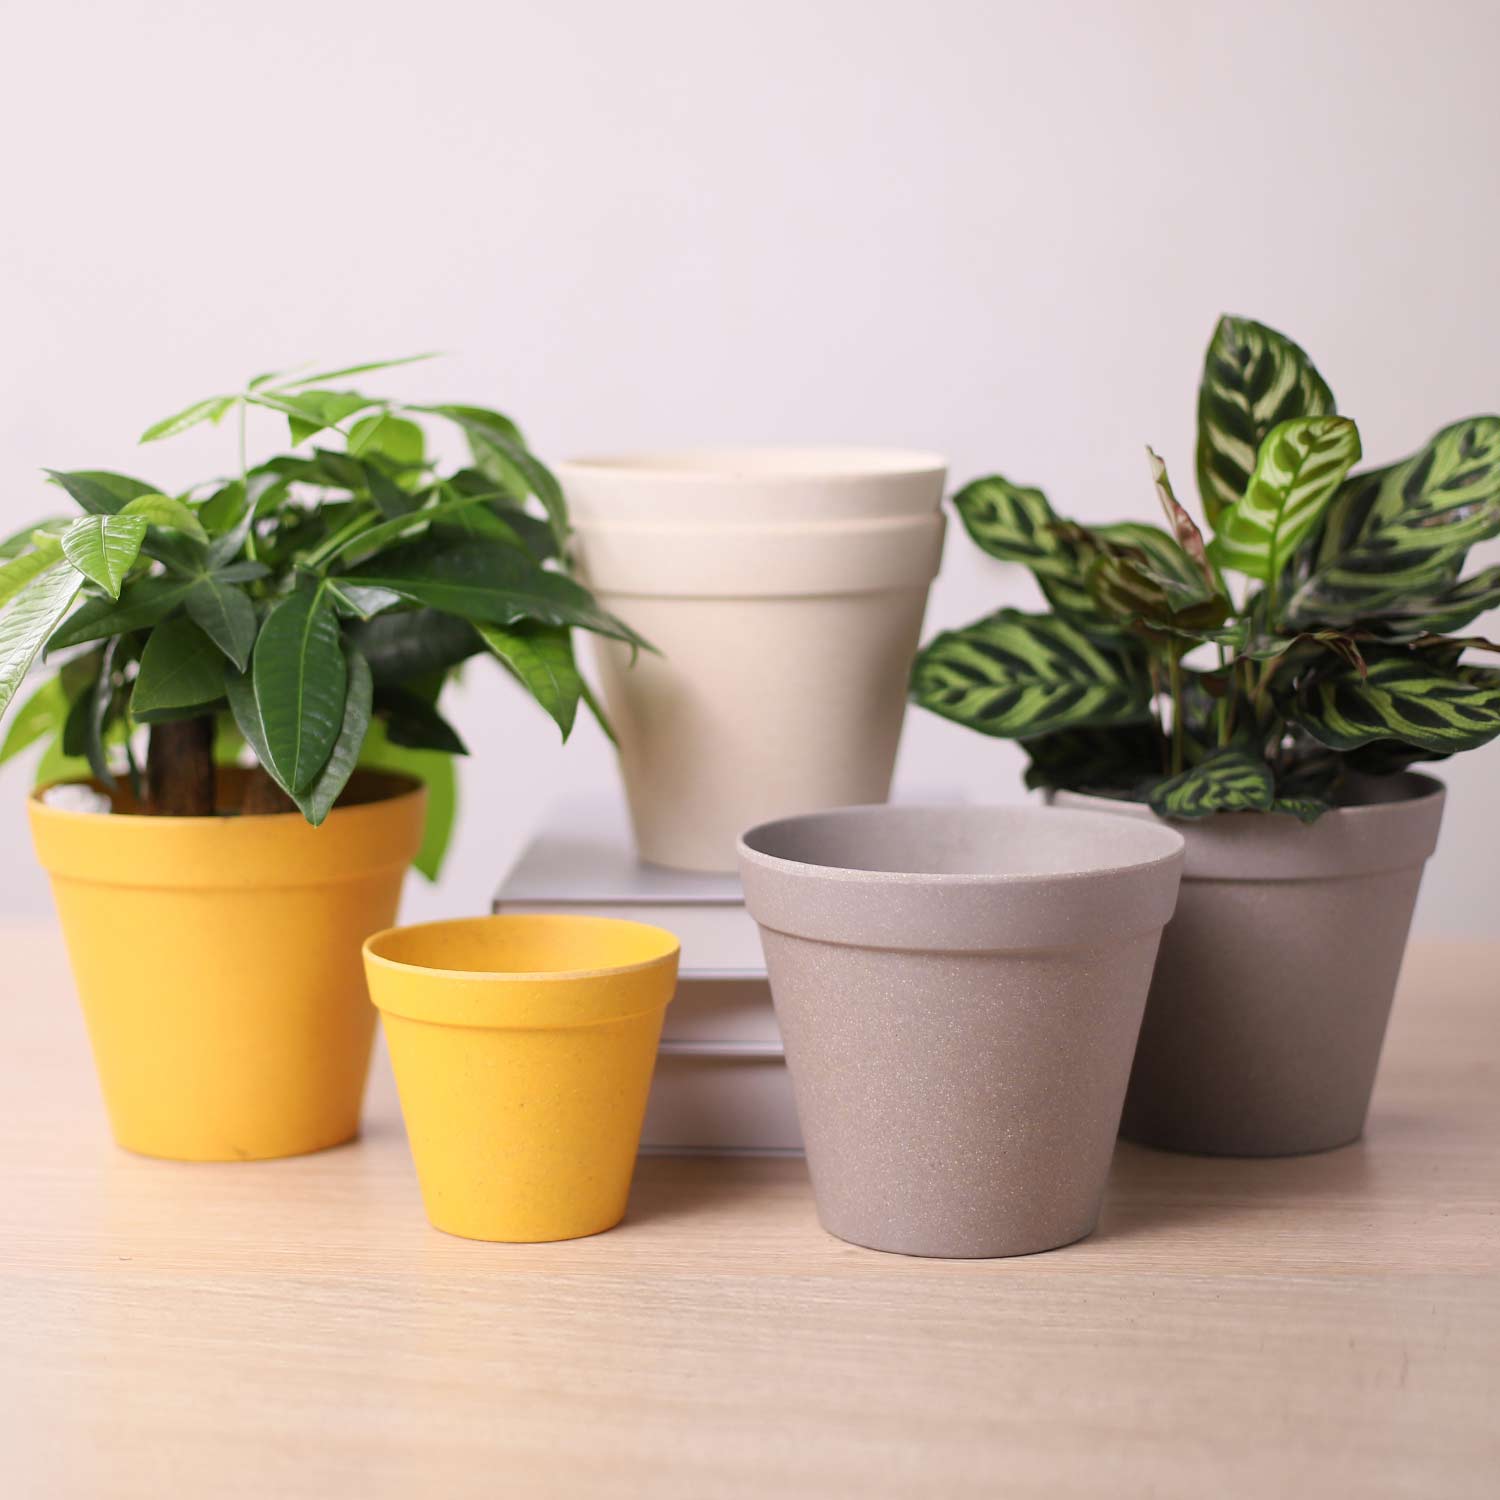 J&C Plantadores de vasos de plantas de interior para ervas flores mini plantas material natural durável